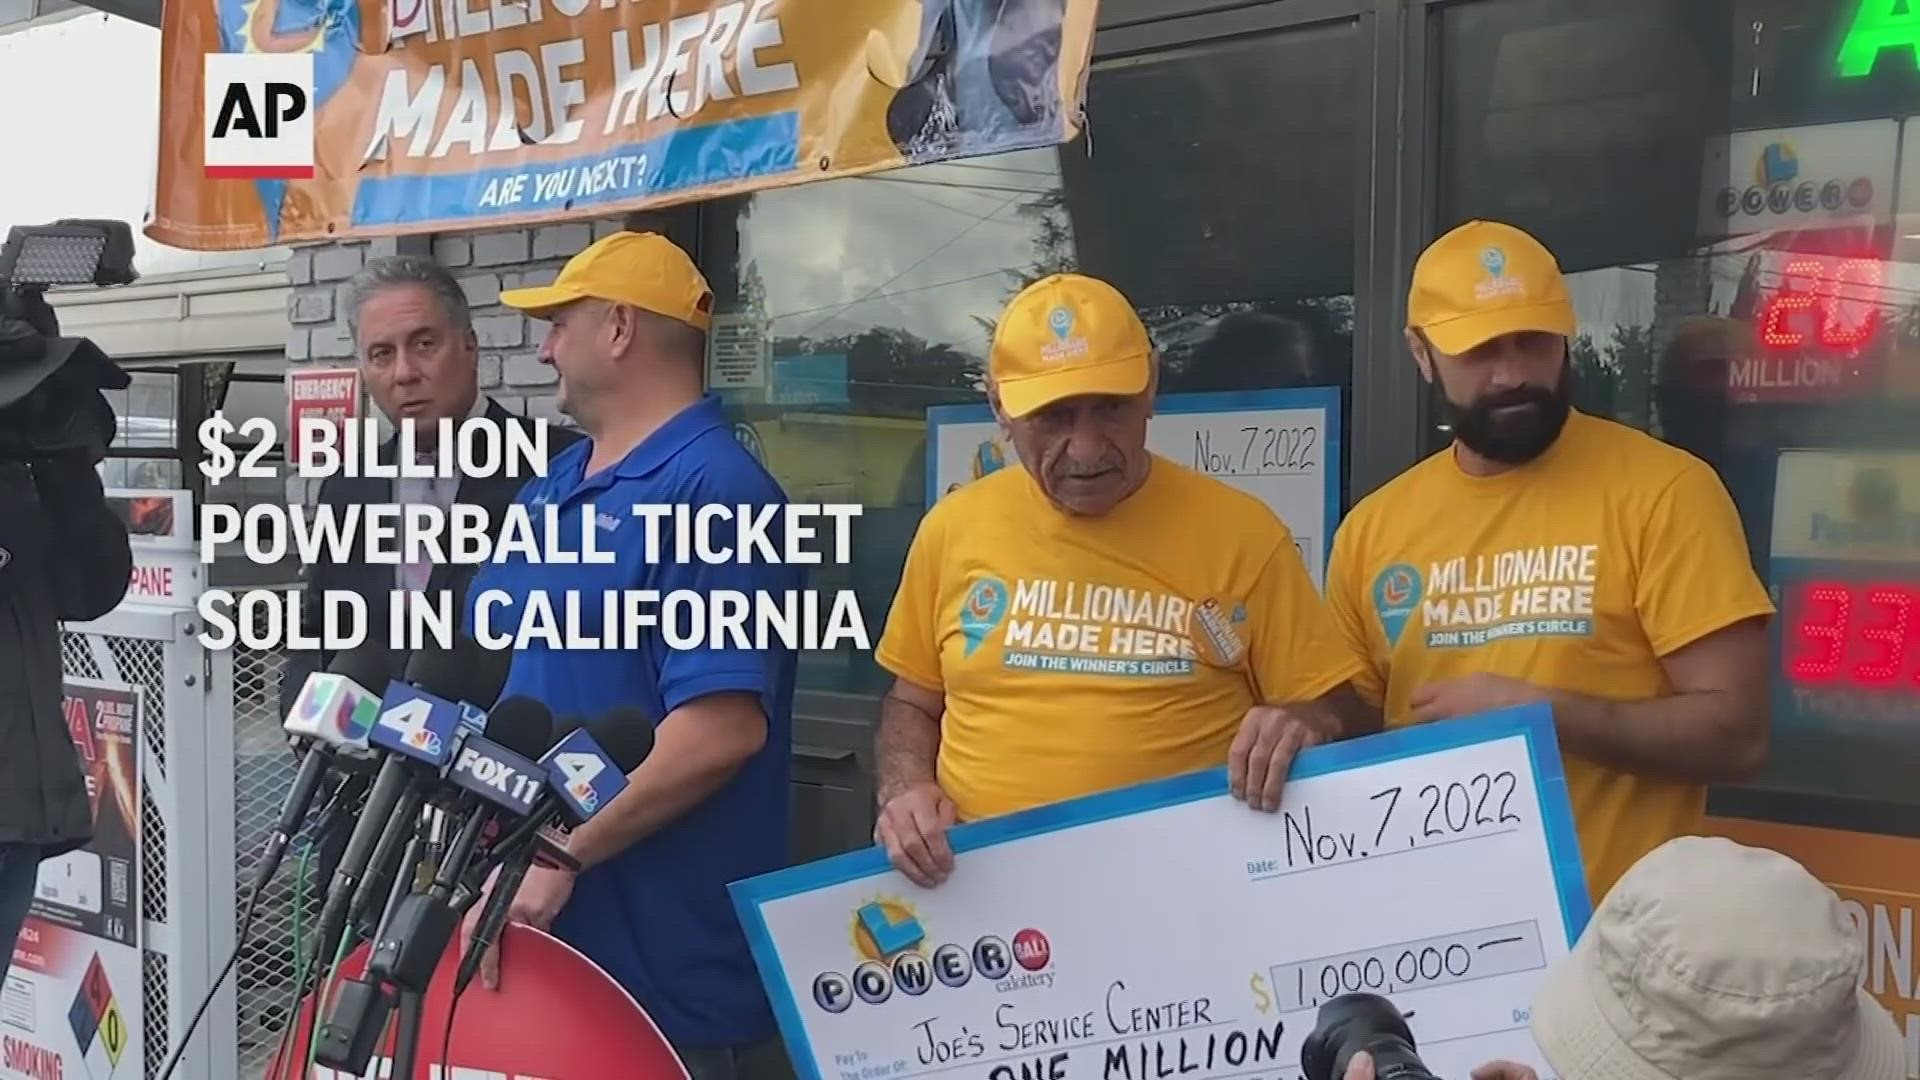 The California Service Center that sold the $2.04 billion jackpot Powerball ticket will receive a maximum Powerball bonus of $1 million.